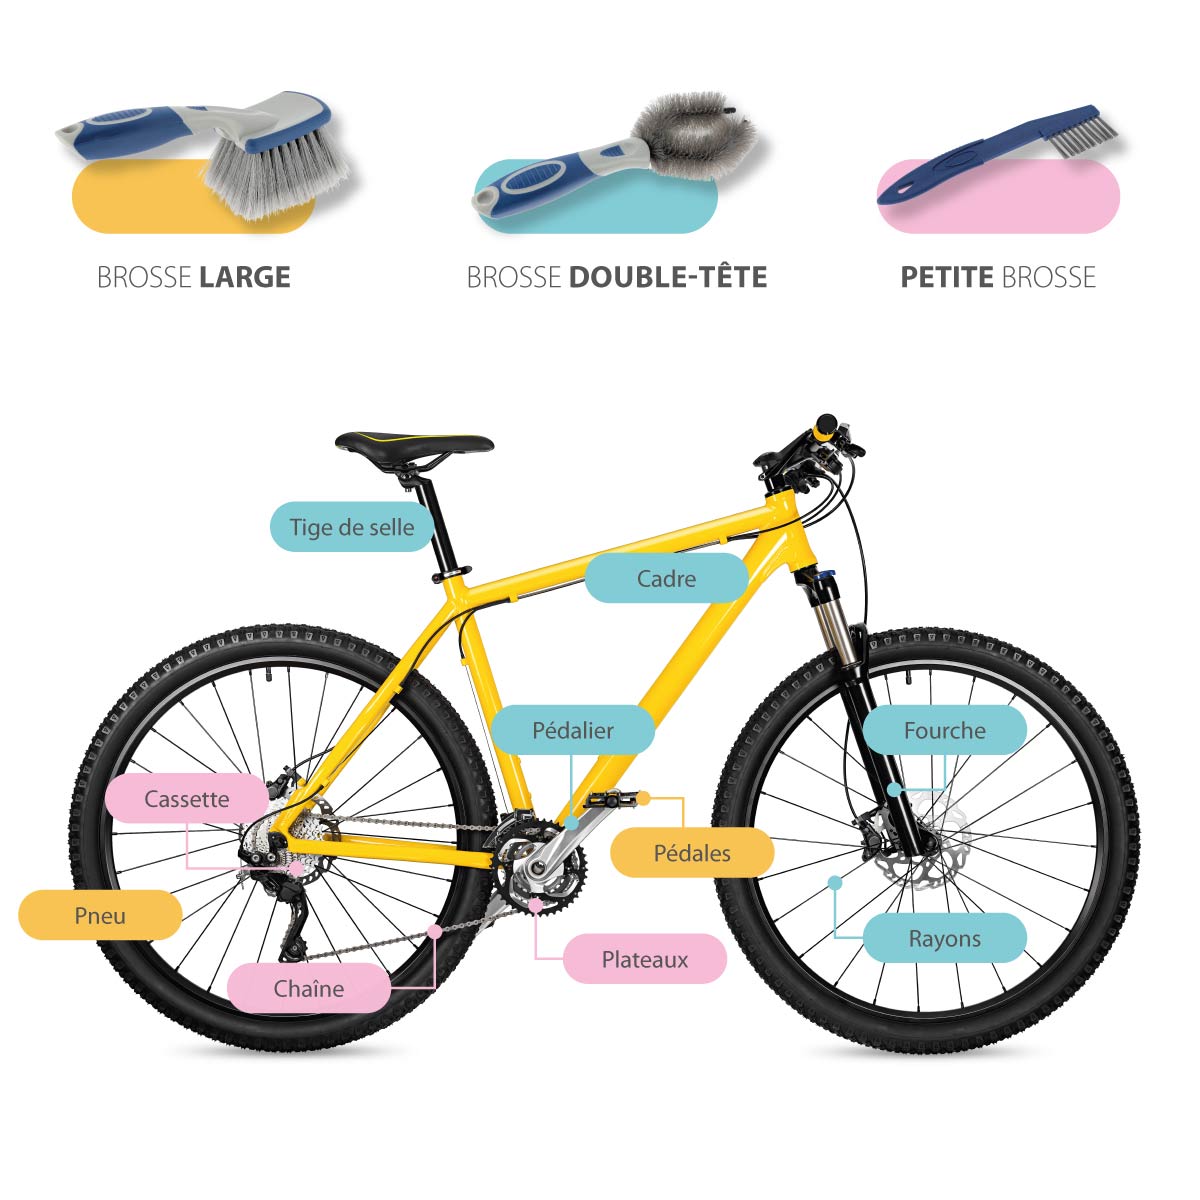 kit brosse de nettoyage Btl-190 - Fun Bike, magasin de vélos